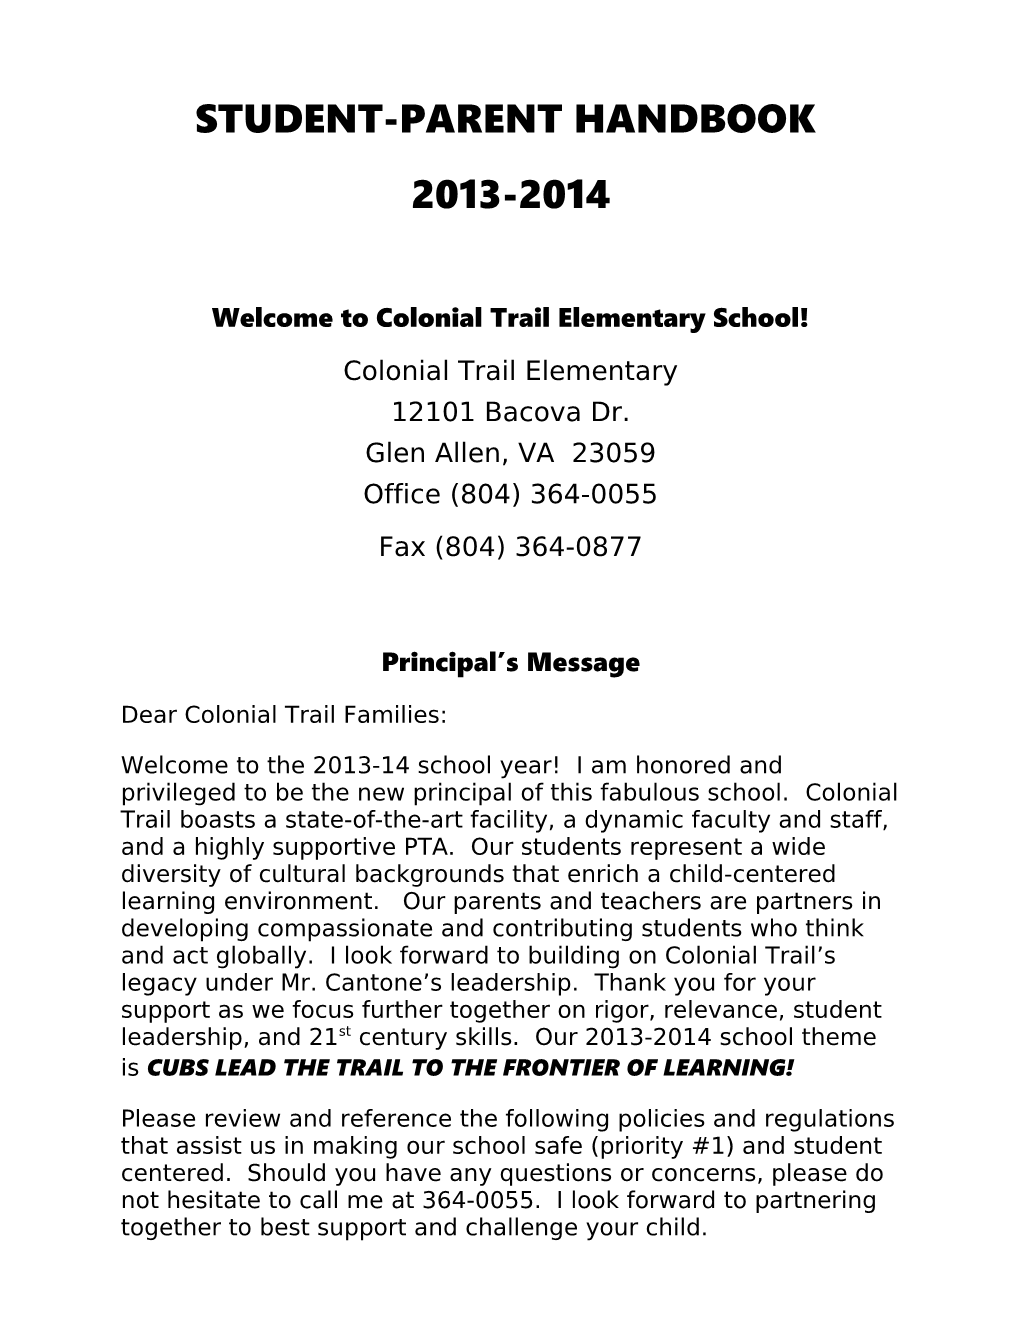 Colonial Trail Elementary School